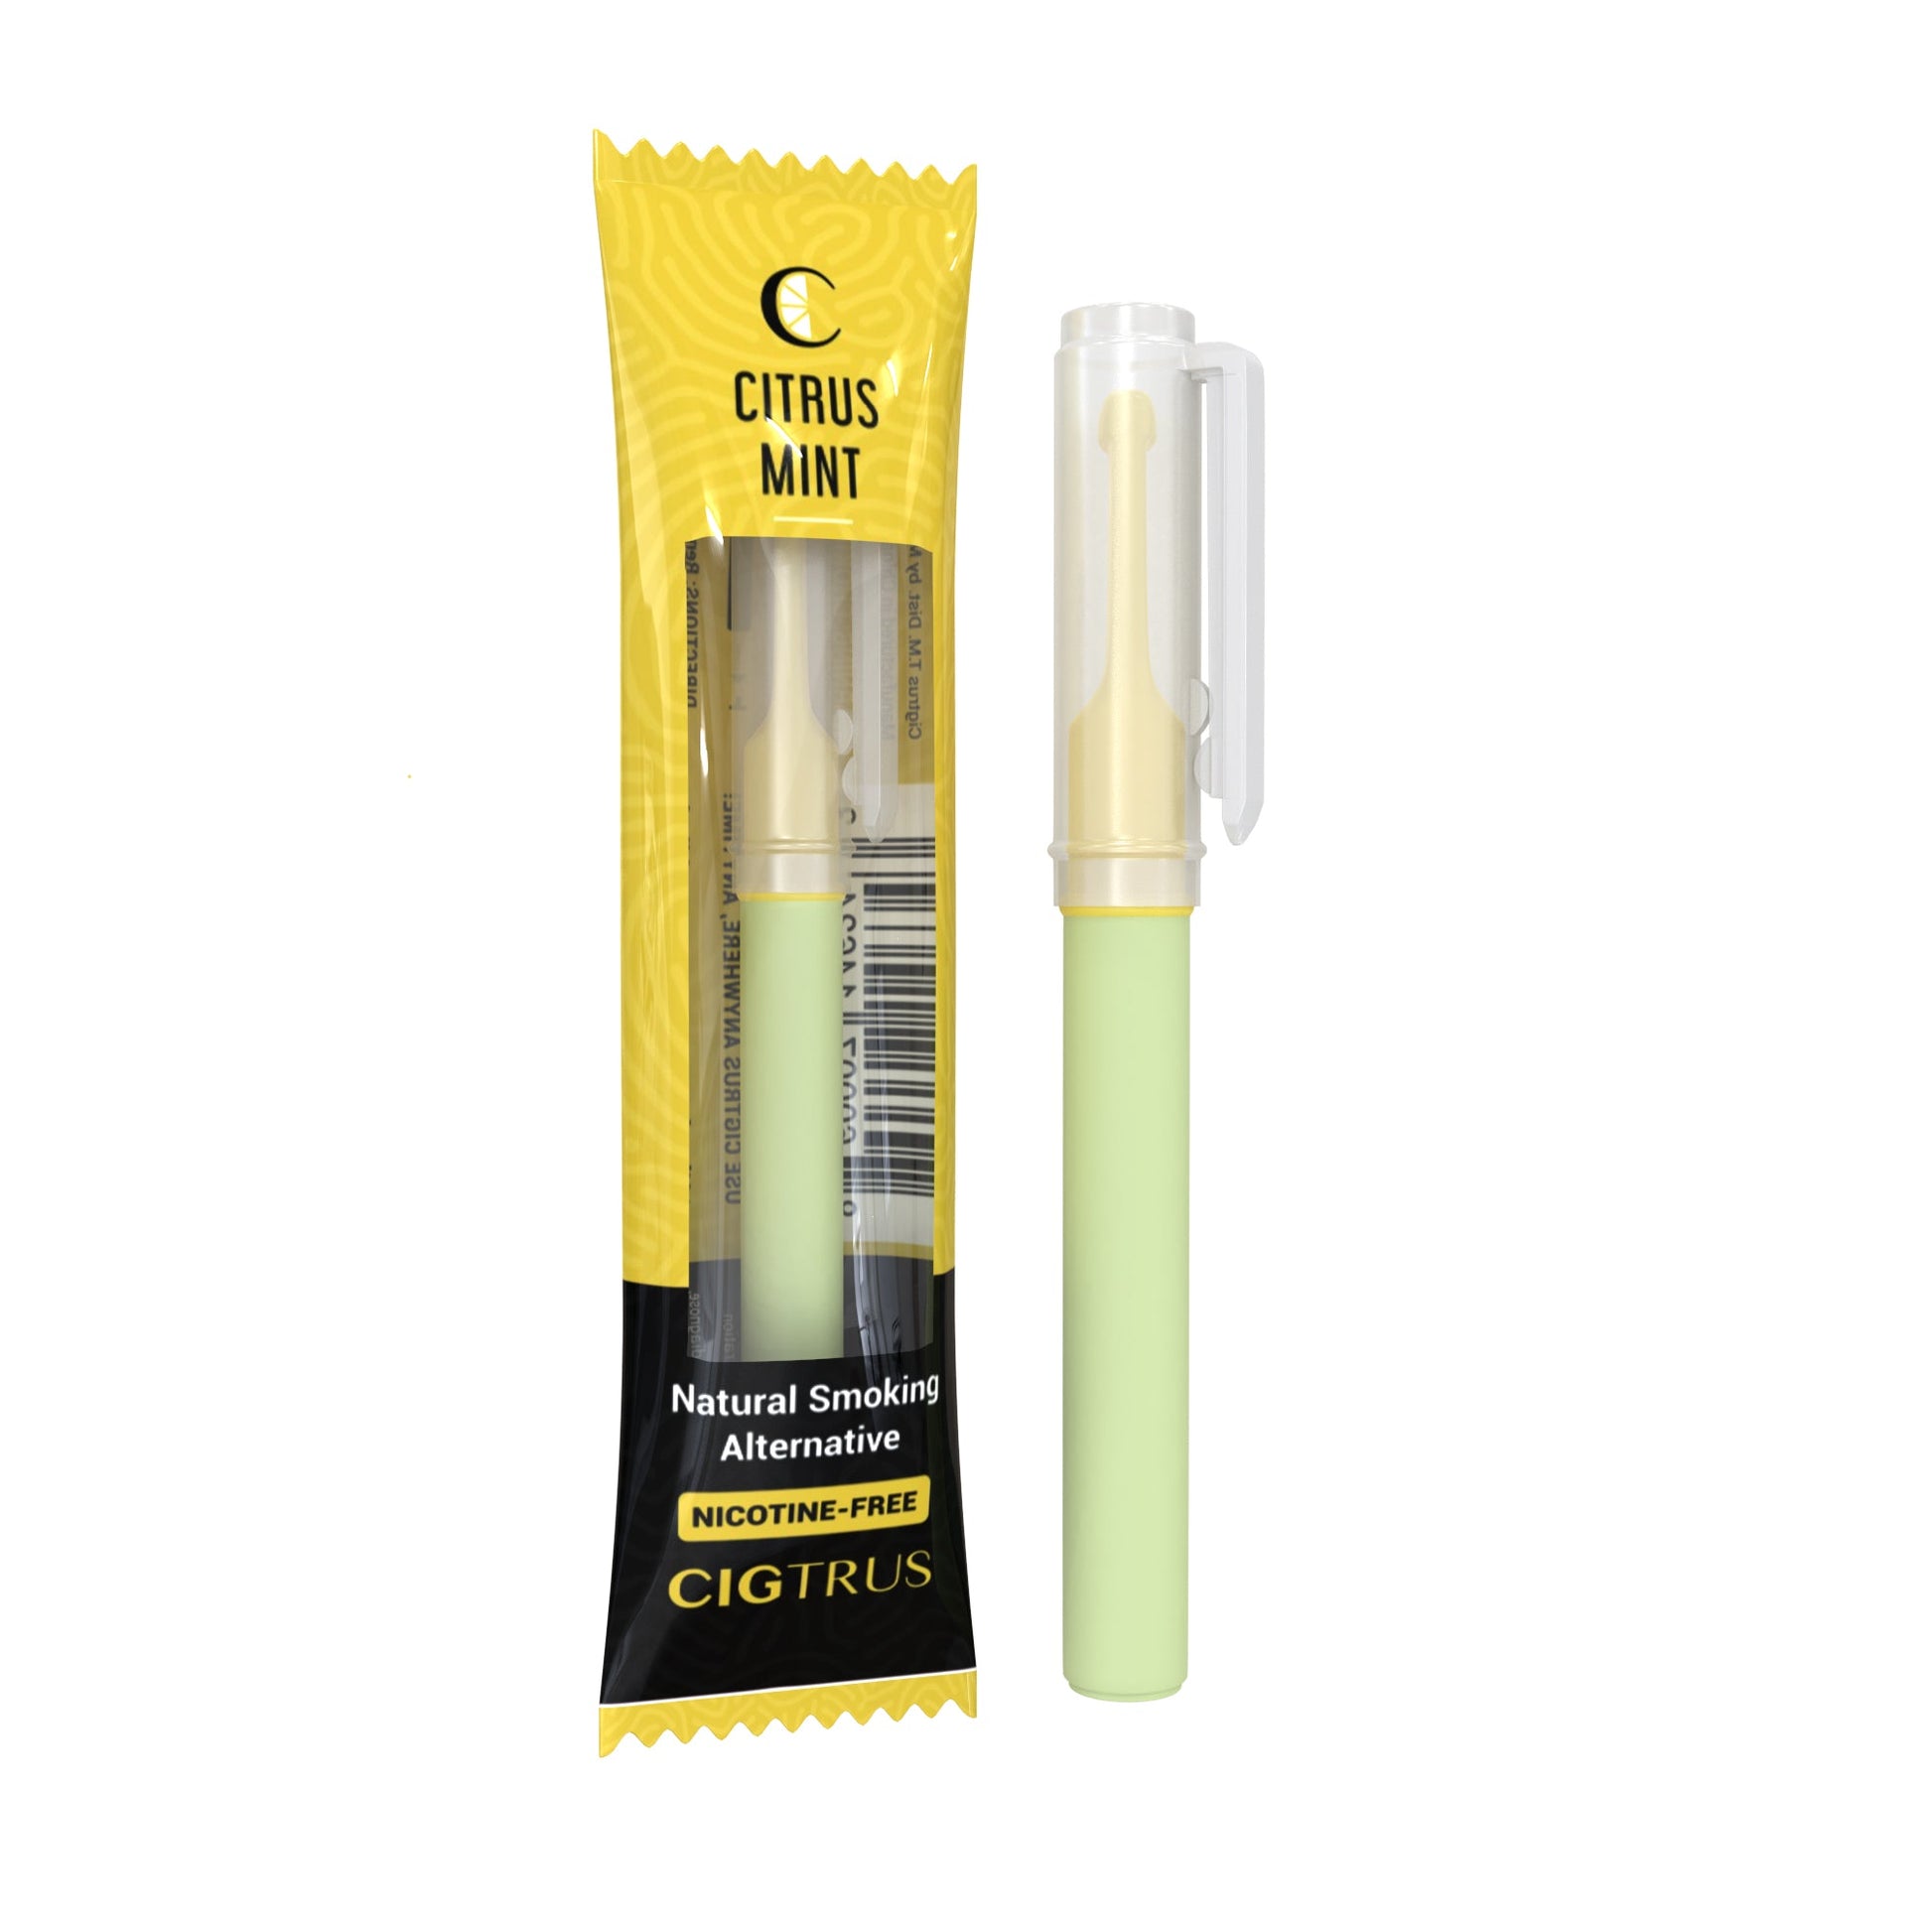 Cigtrus Smokeless Oxygen Air Inhaler Oral Fixation Relief Natural Quit Aid Behavioral Support – Pick Your Flavor - Citrus Mint - cigtrus.comcigtrus.com